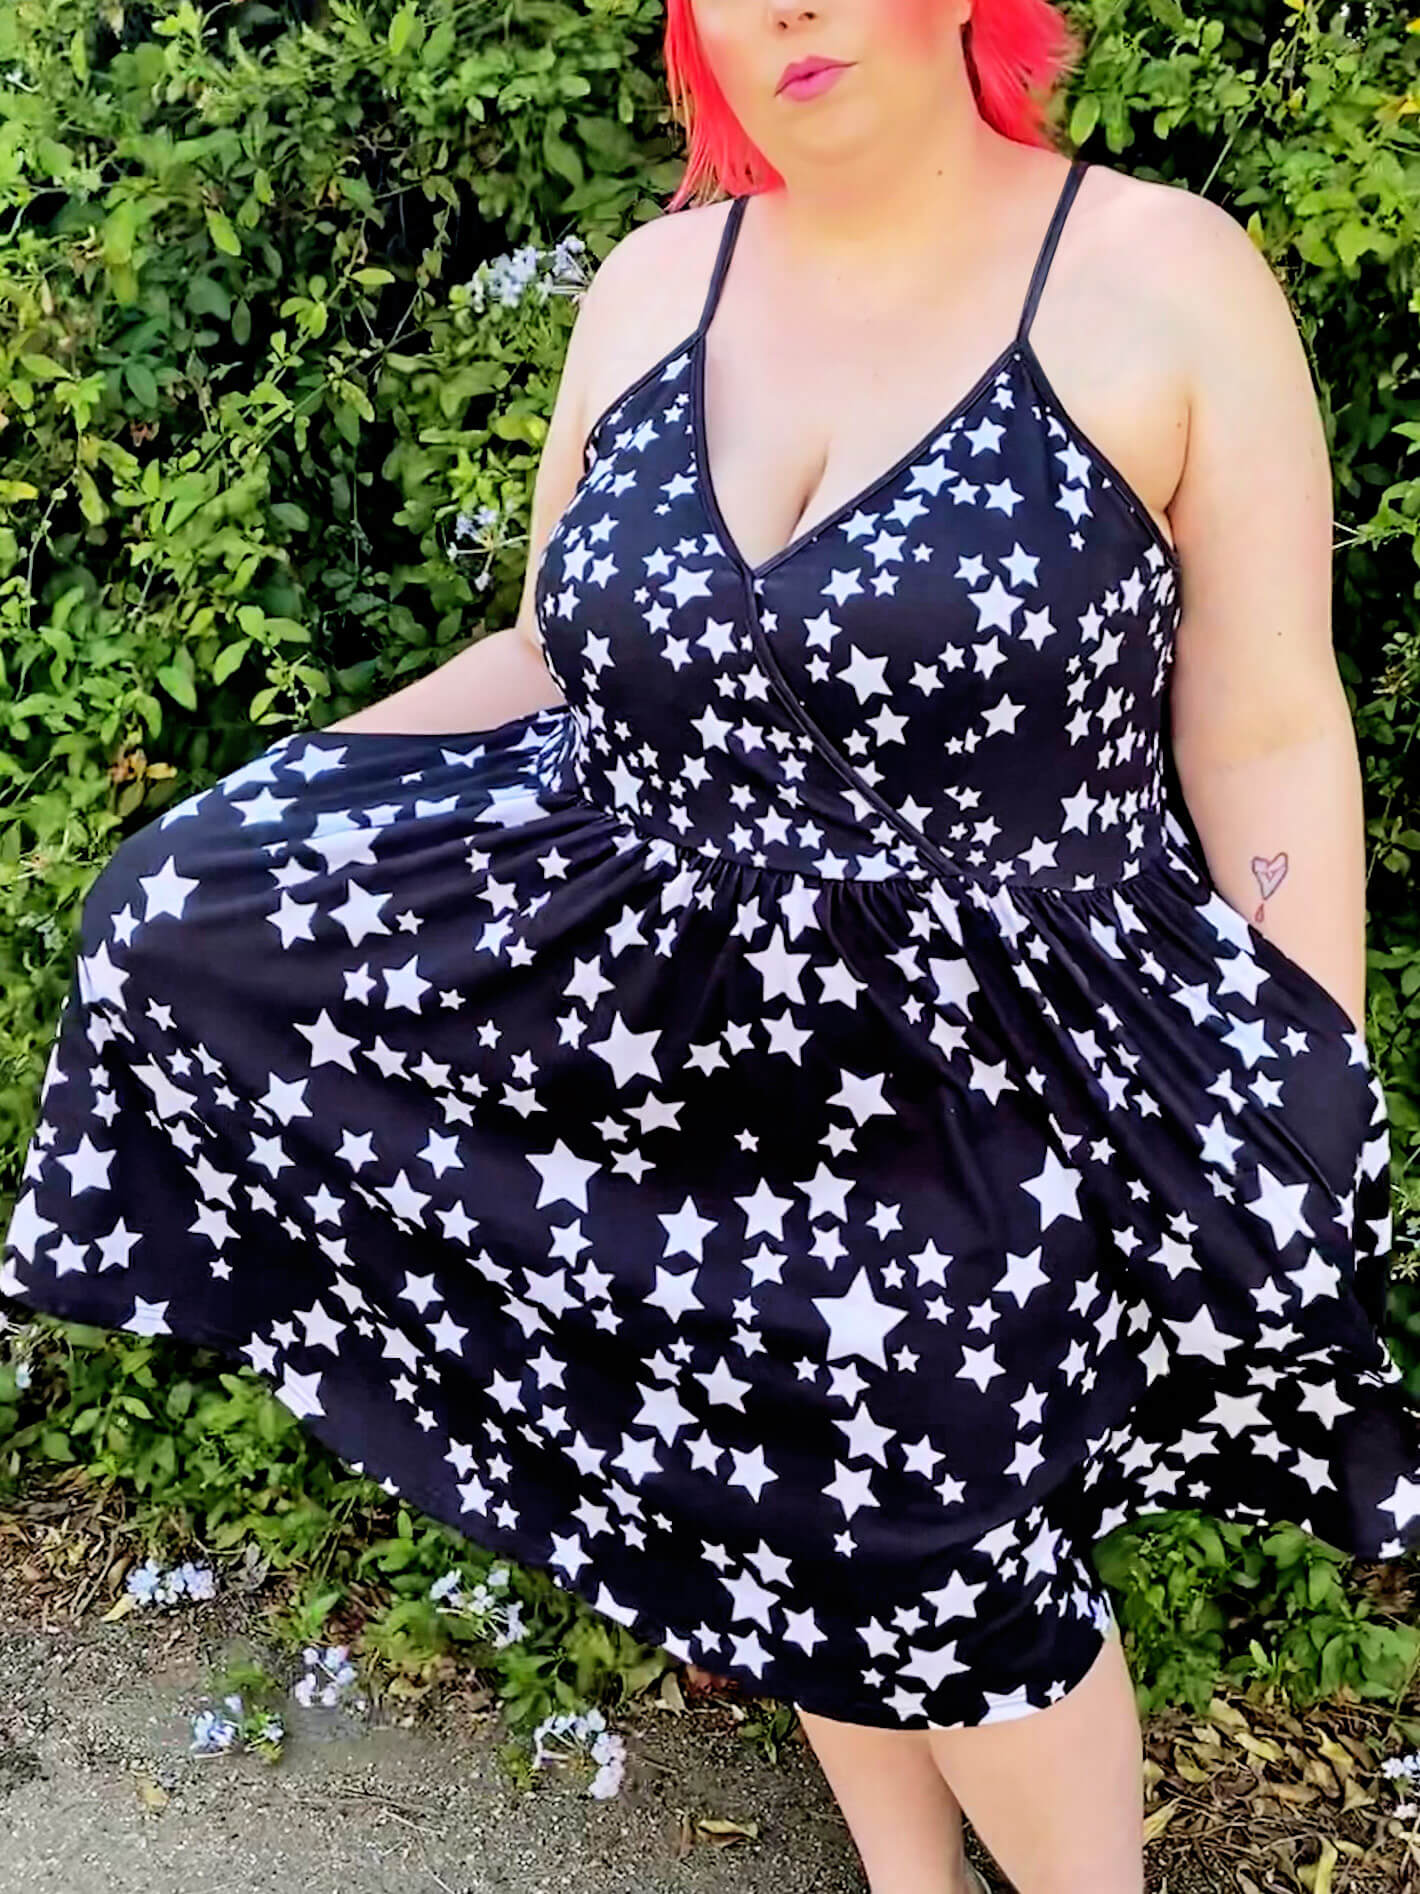 Goth plus size summer dress.